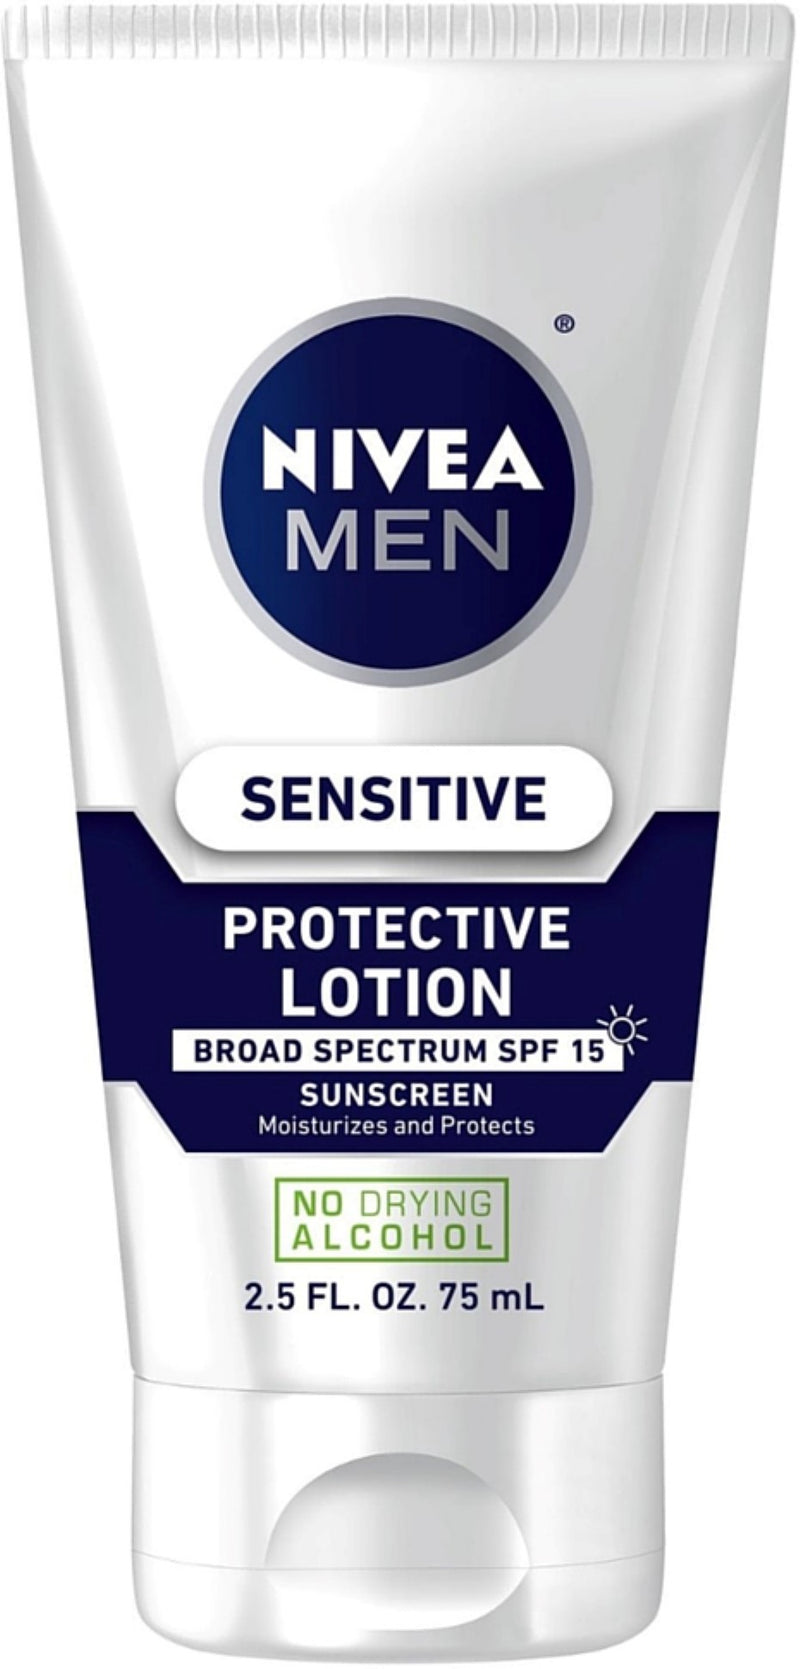 NIVEA Men Sensitive Protective Lotion Sunscreen SPF 15 2.5 oz